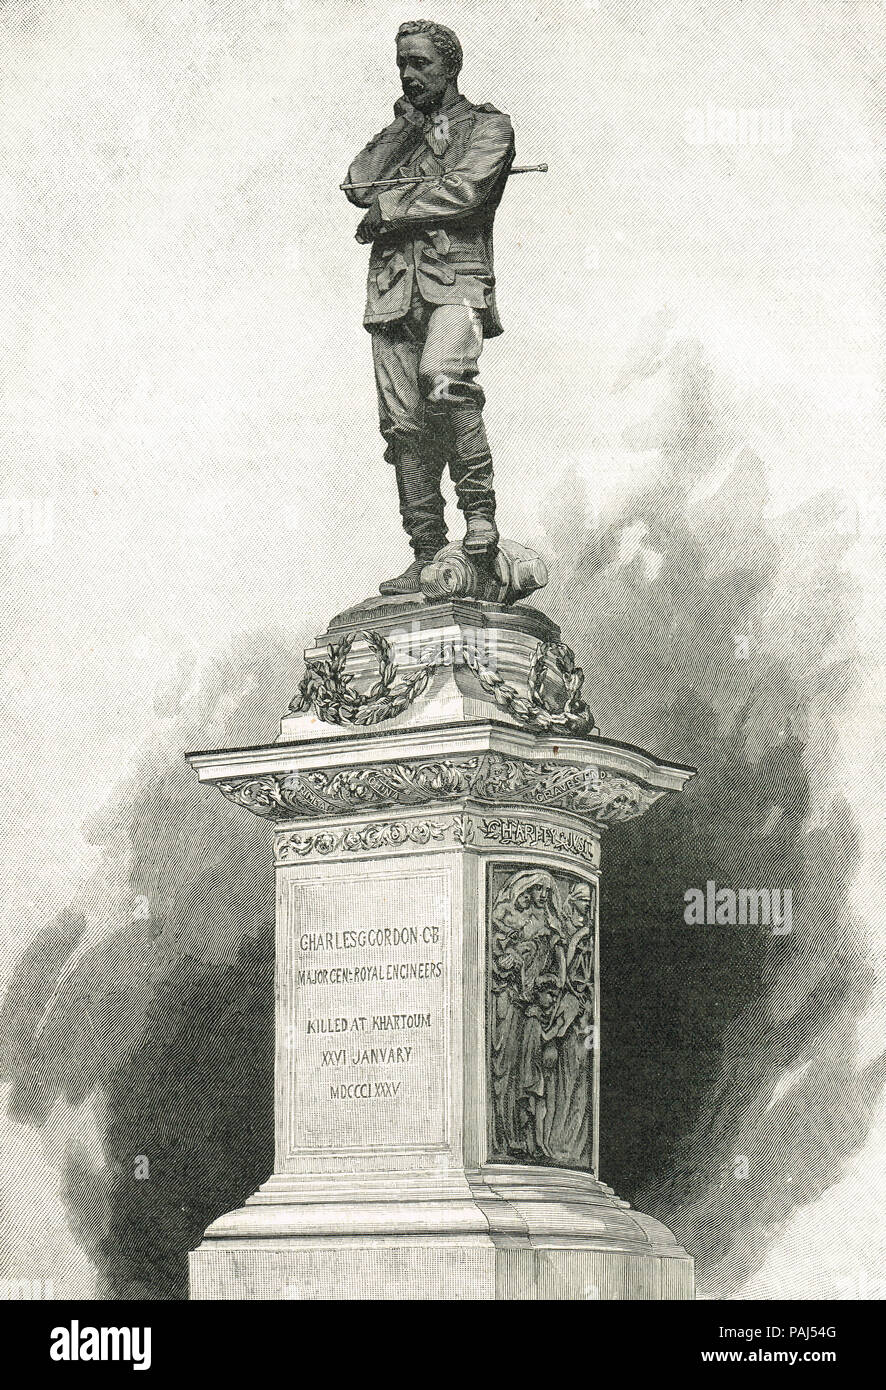 Statua del generale Gordon, Gordon di Khartoum, 1833-1885, monumento di Sir William Hamo Thornycroft, Trafalgar Square, Londra, Inghilterra Foto Stock